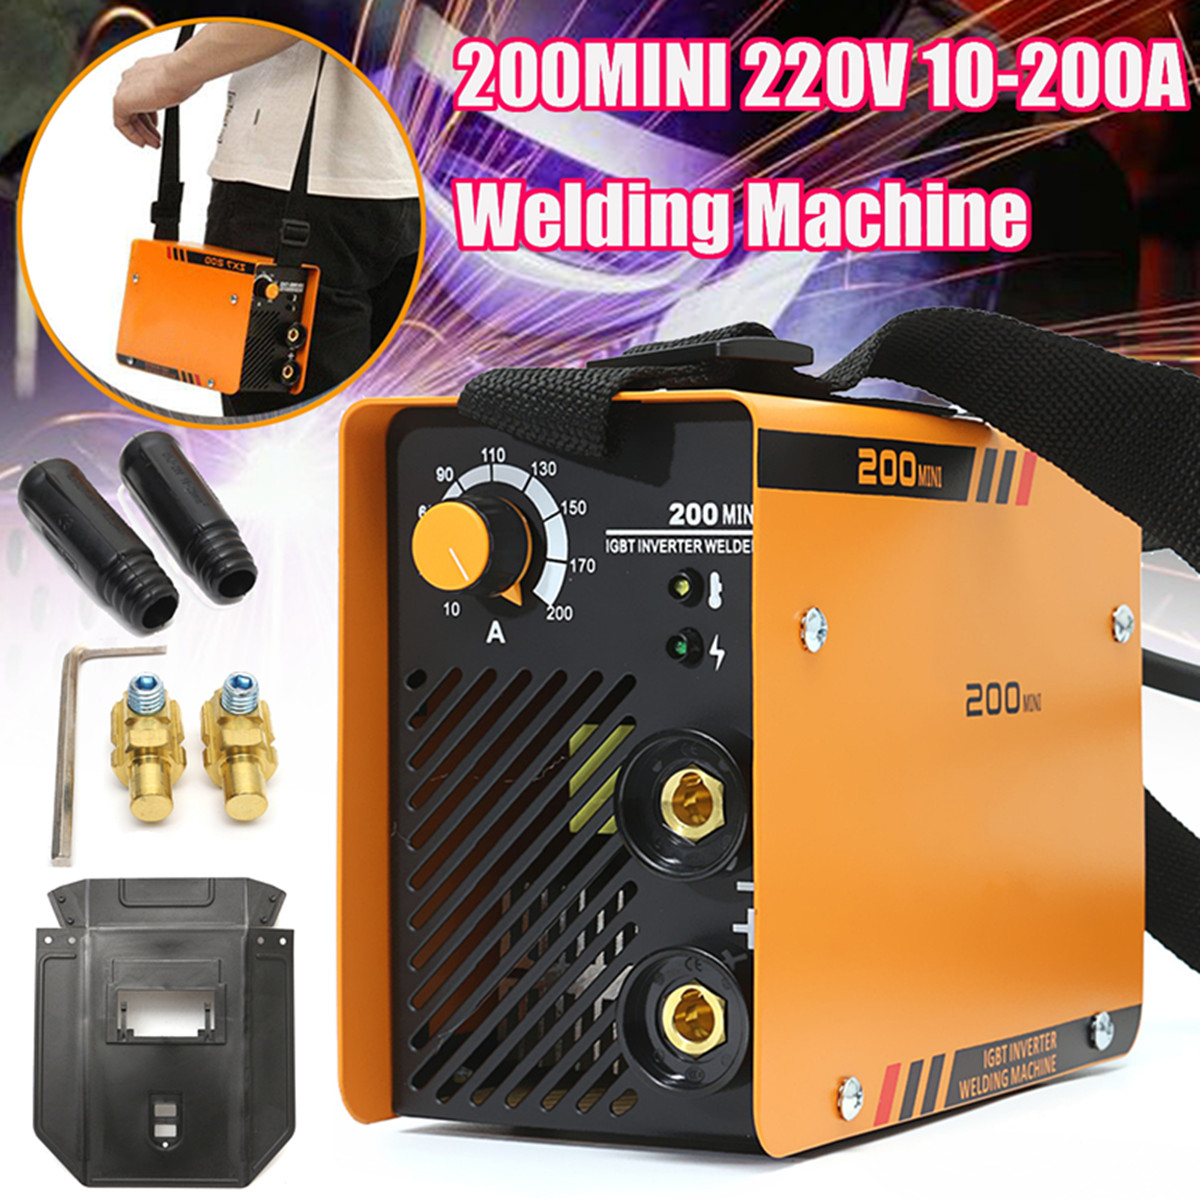 ZX7-200MINI-Welding-Machine-MMA-Handheld-220V-Portable-10-200A-Inverter-ARC-Welding-Tool-1375531-4